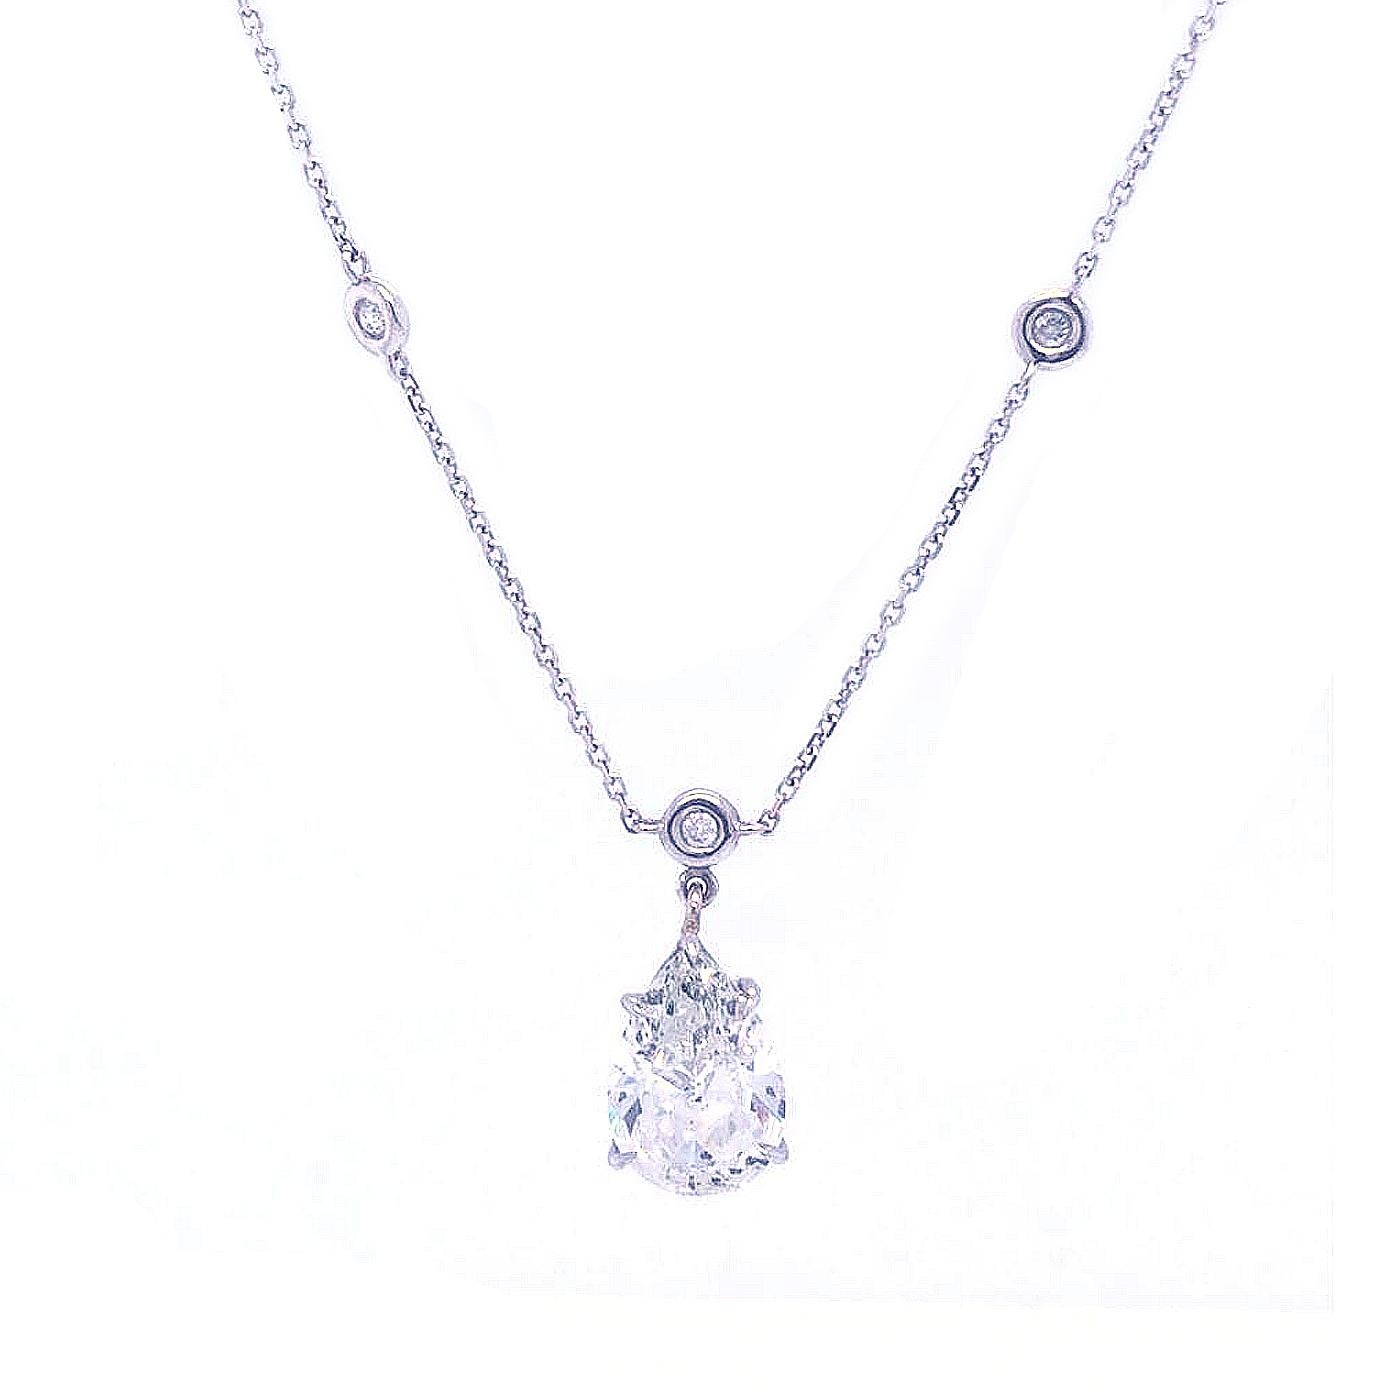 Pear Cut Pear Shape Diamond Link Chain Necklace Pendant Dangling 14K White Gold 2.65ct 4g